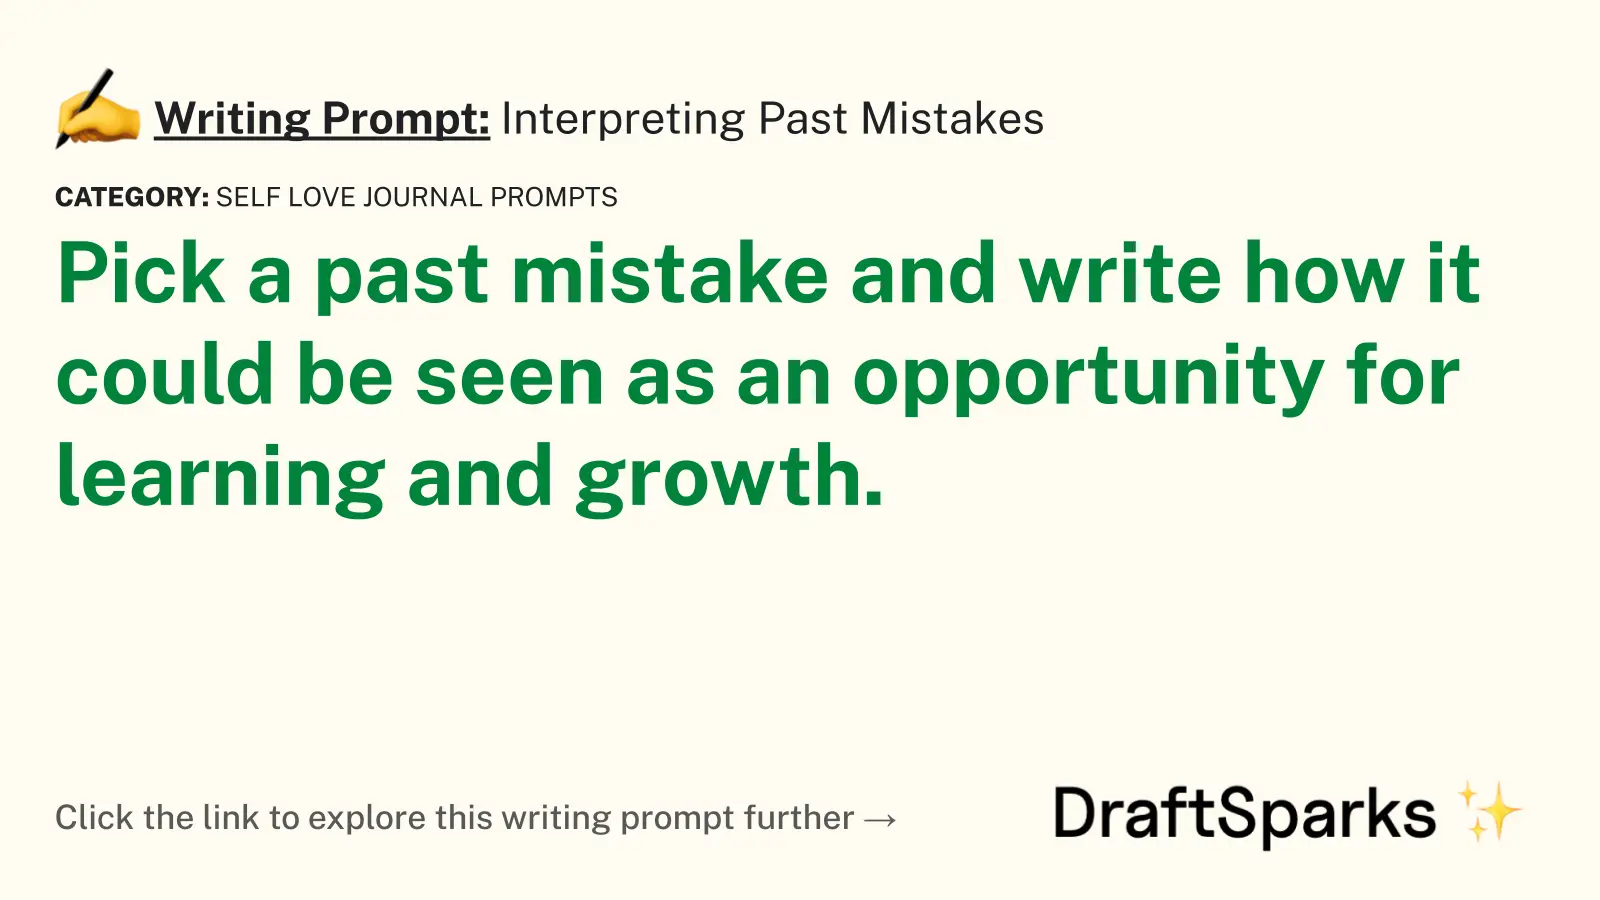 Interpreting Past Mistakes